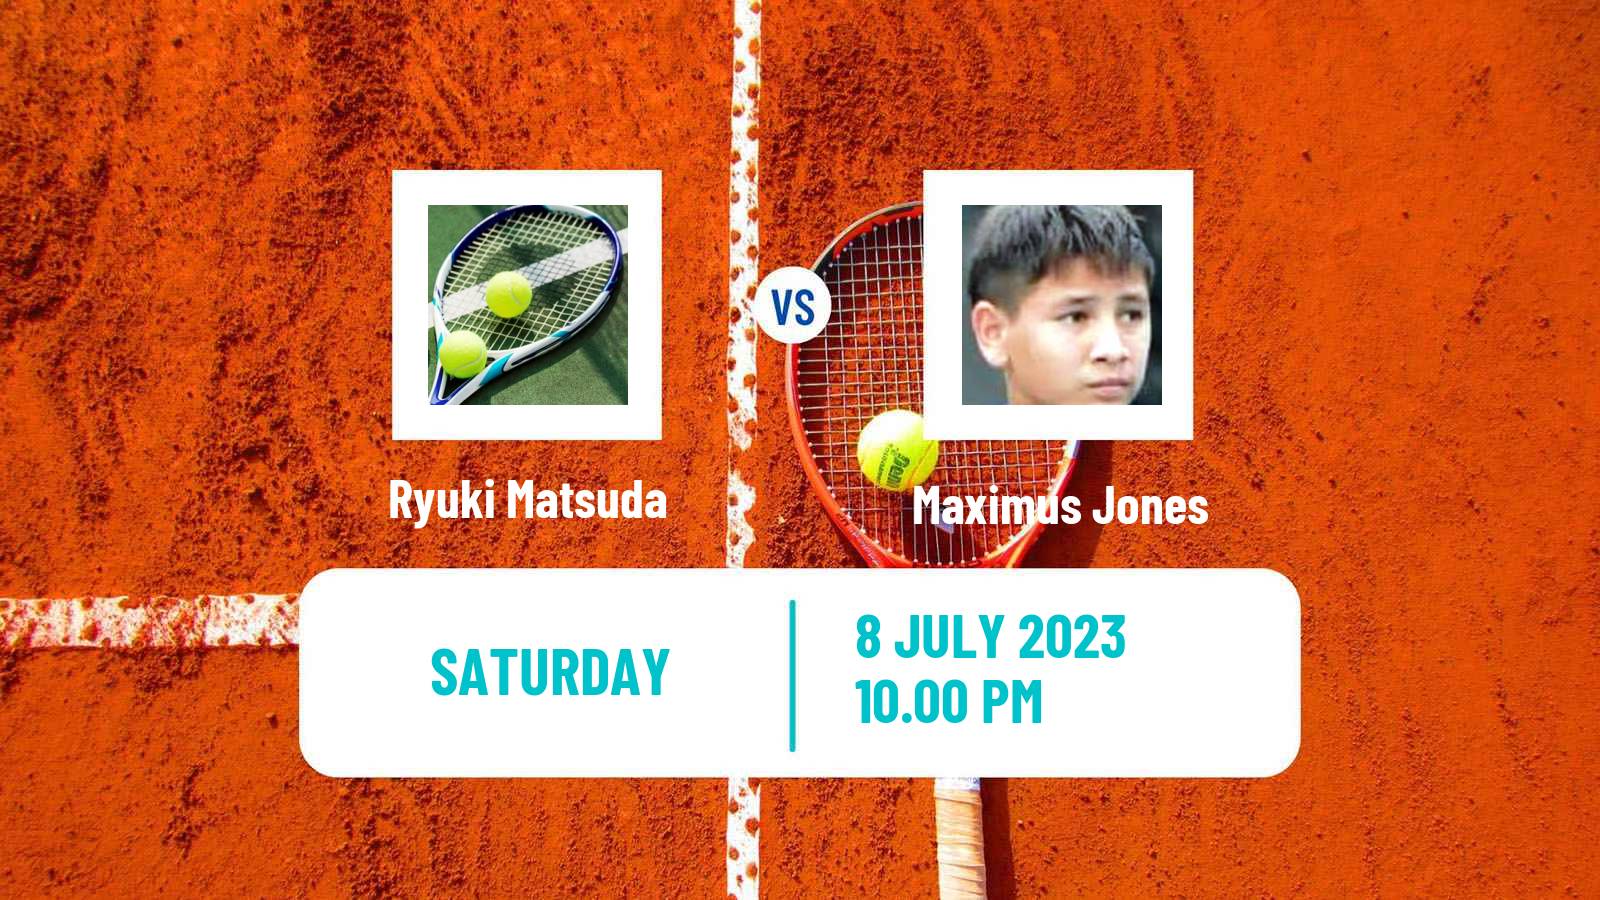 Tennis ITF M15 Nakhon Si Thammarat 3 Men Ryuki Matsuda - Maximus Jones